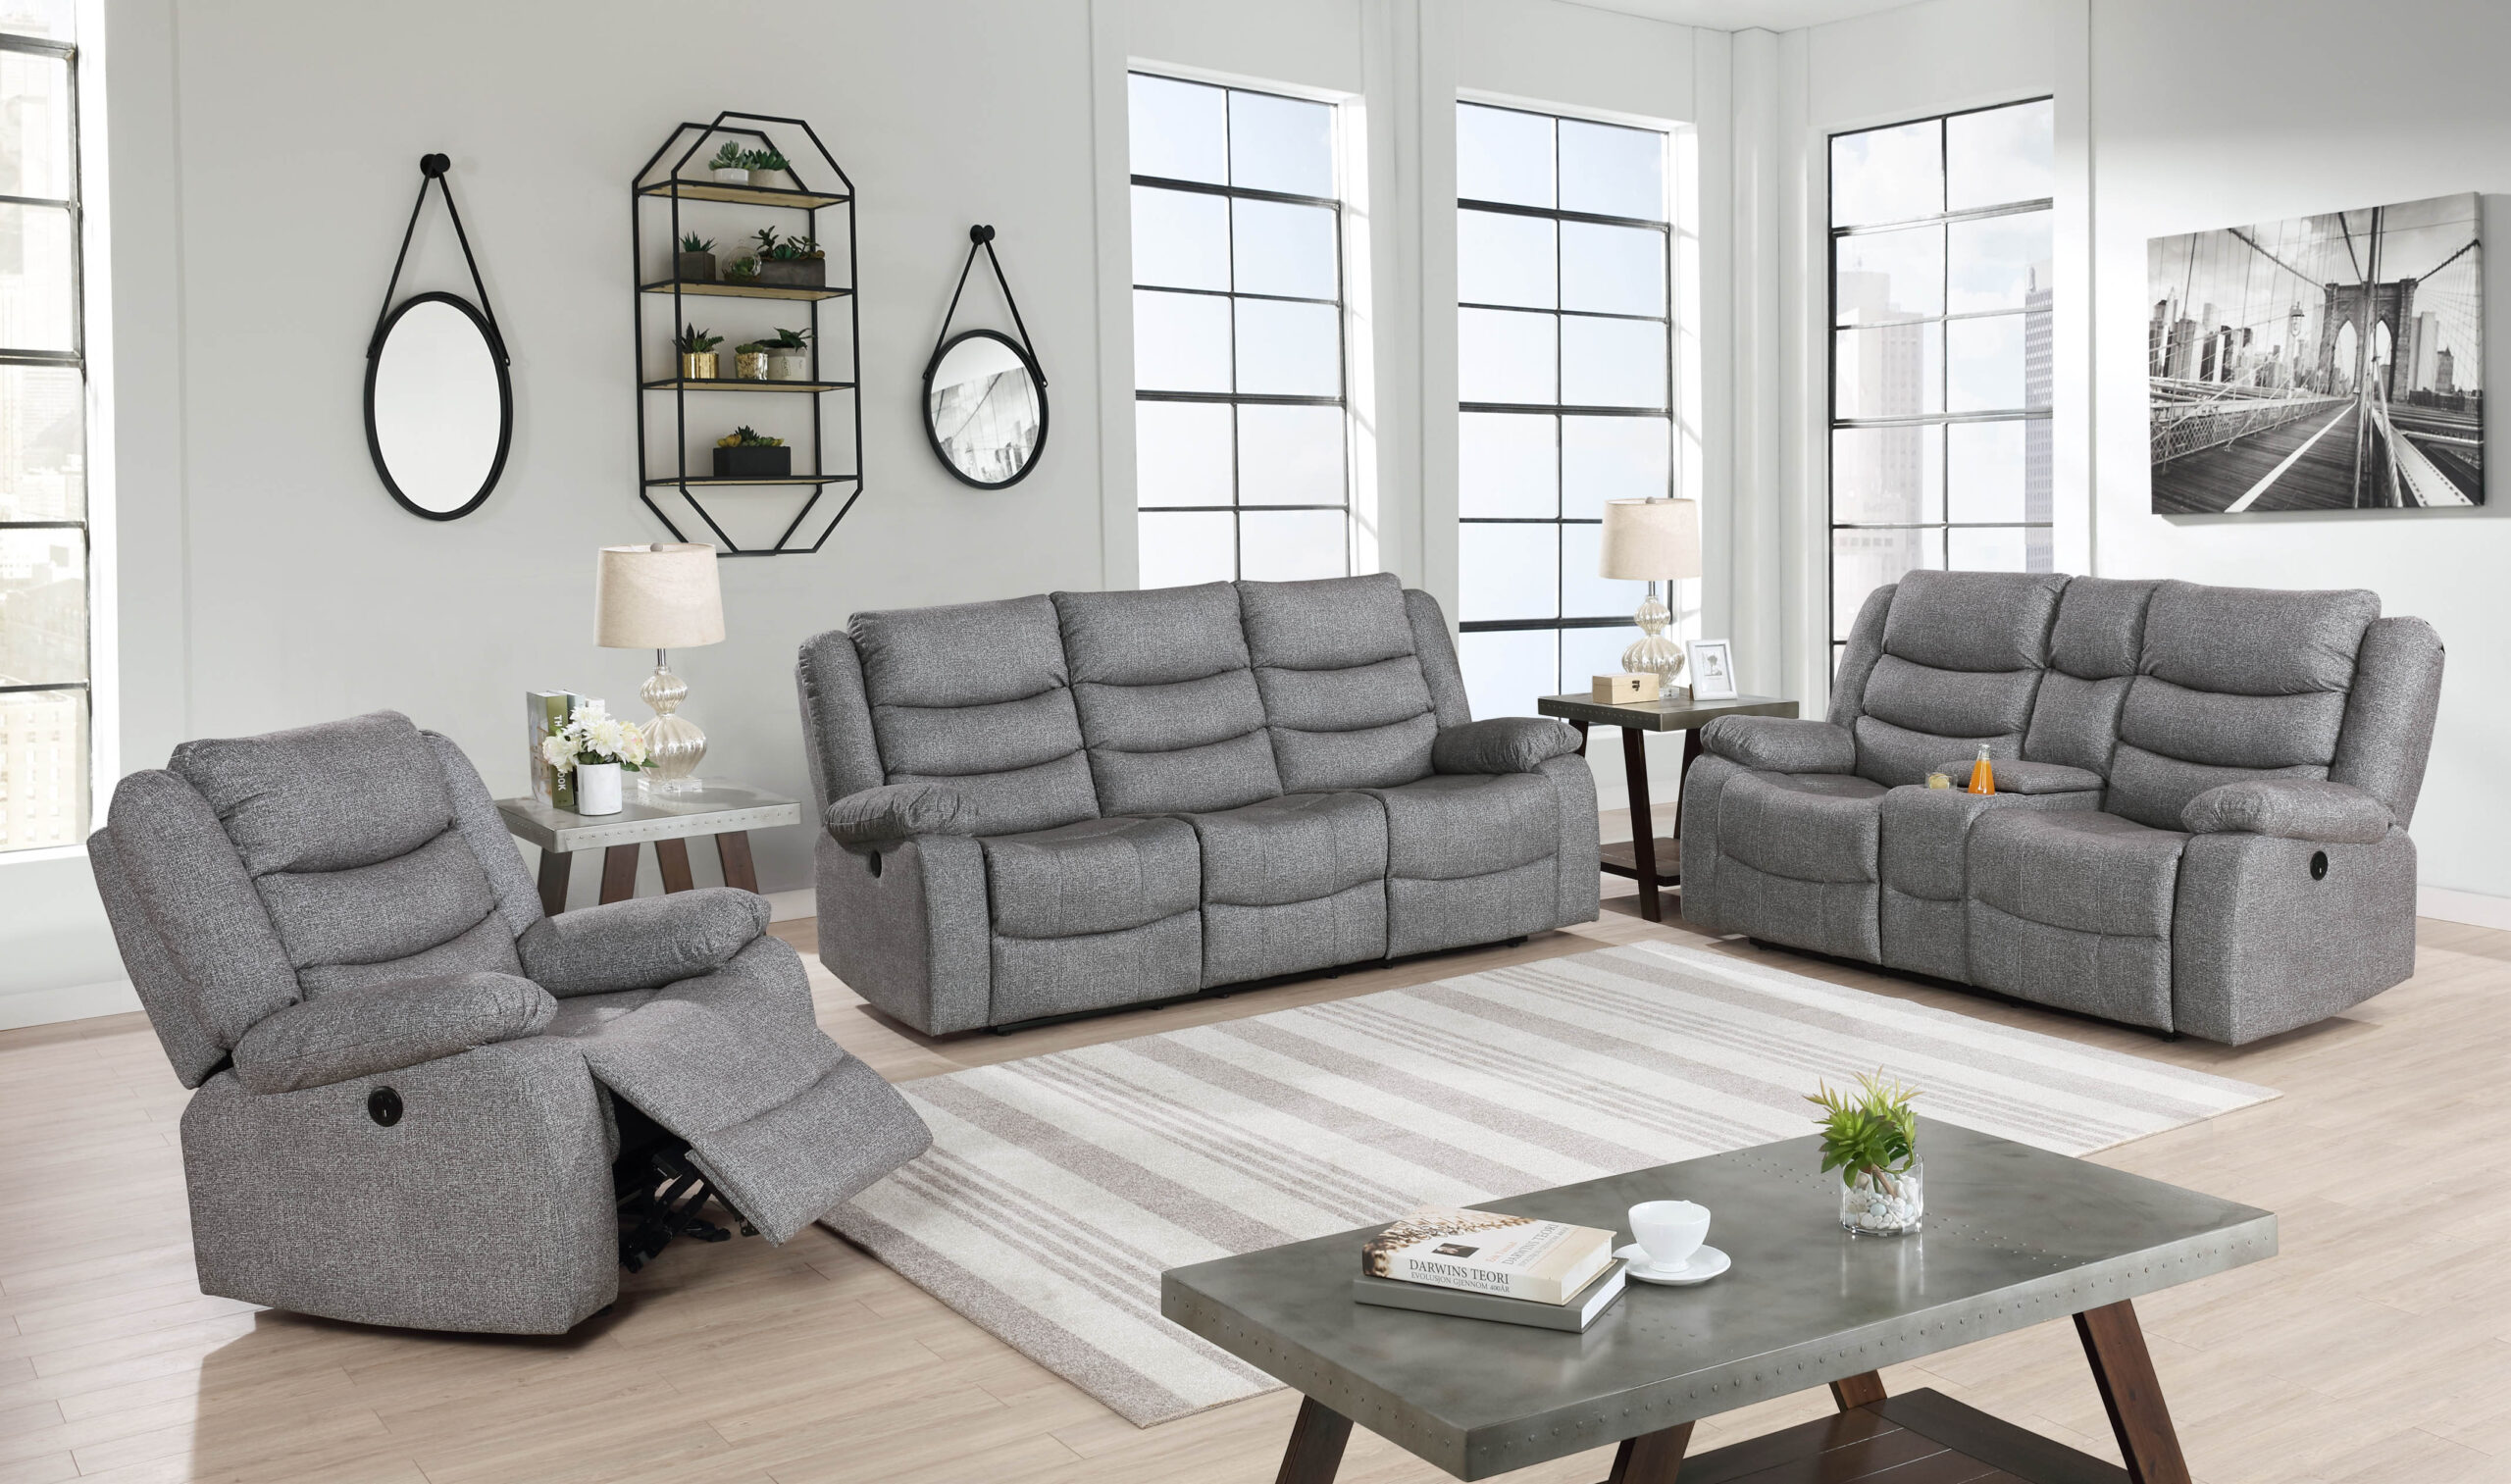 Granada - New Classic Furniture